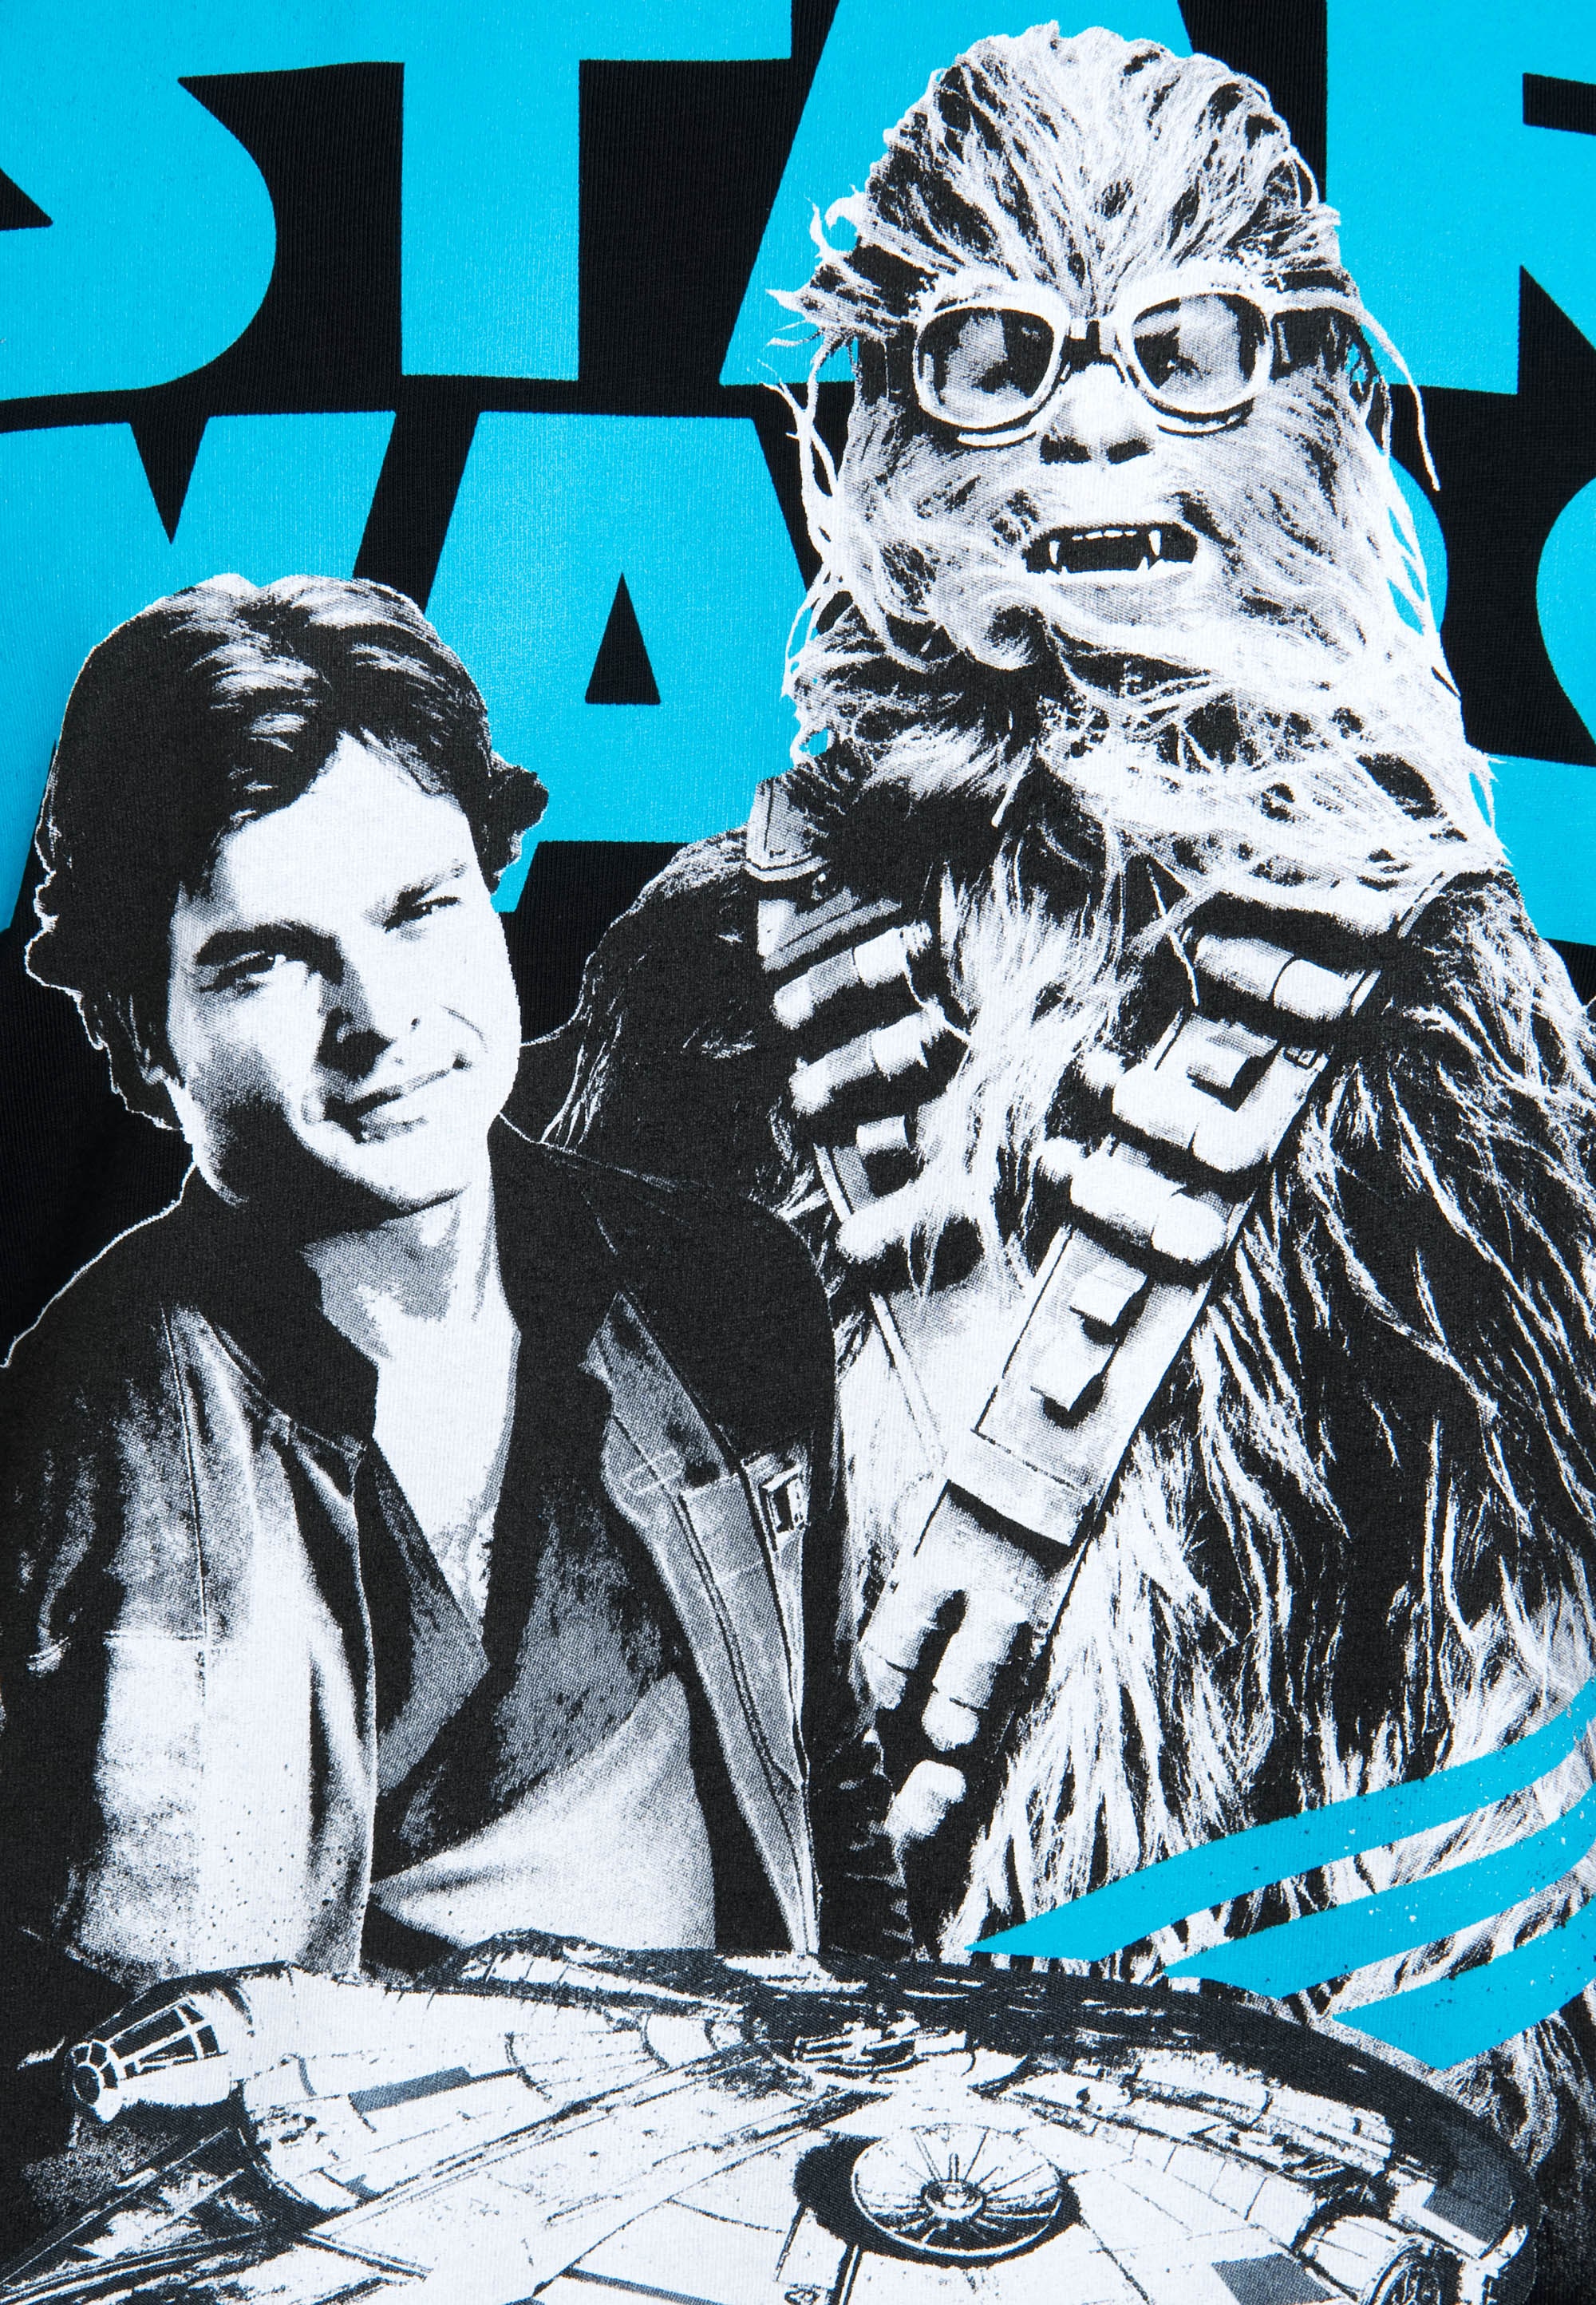 LOGOSHIRT T-Shirt »A Star Wars Story Han Solo & Chewbacca«, mit auffälligem Print